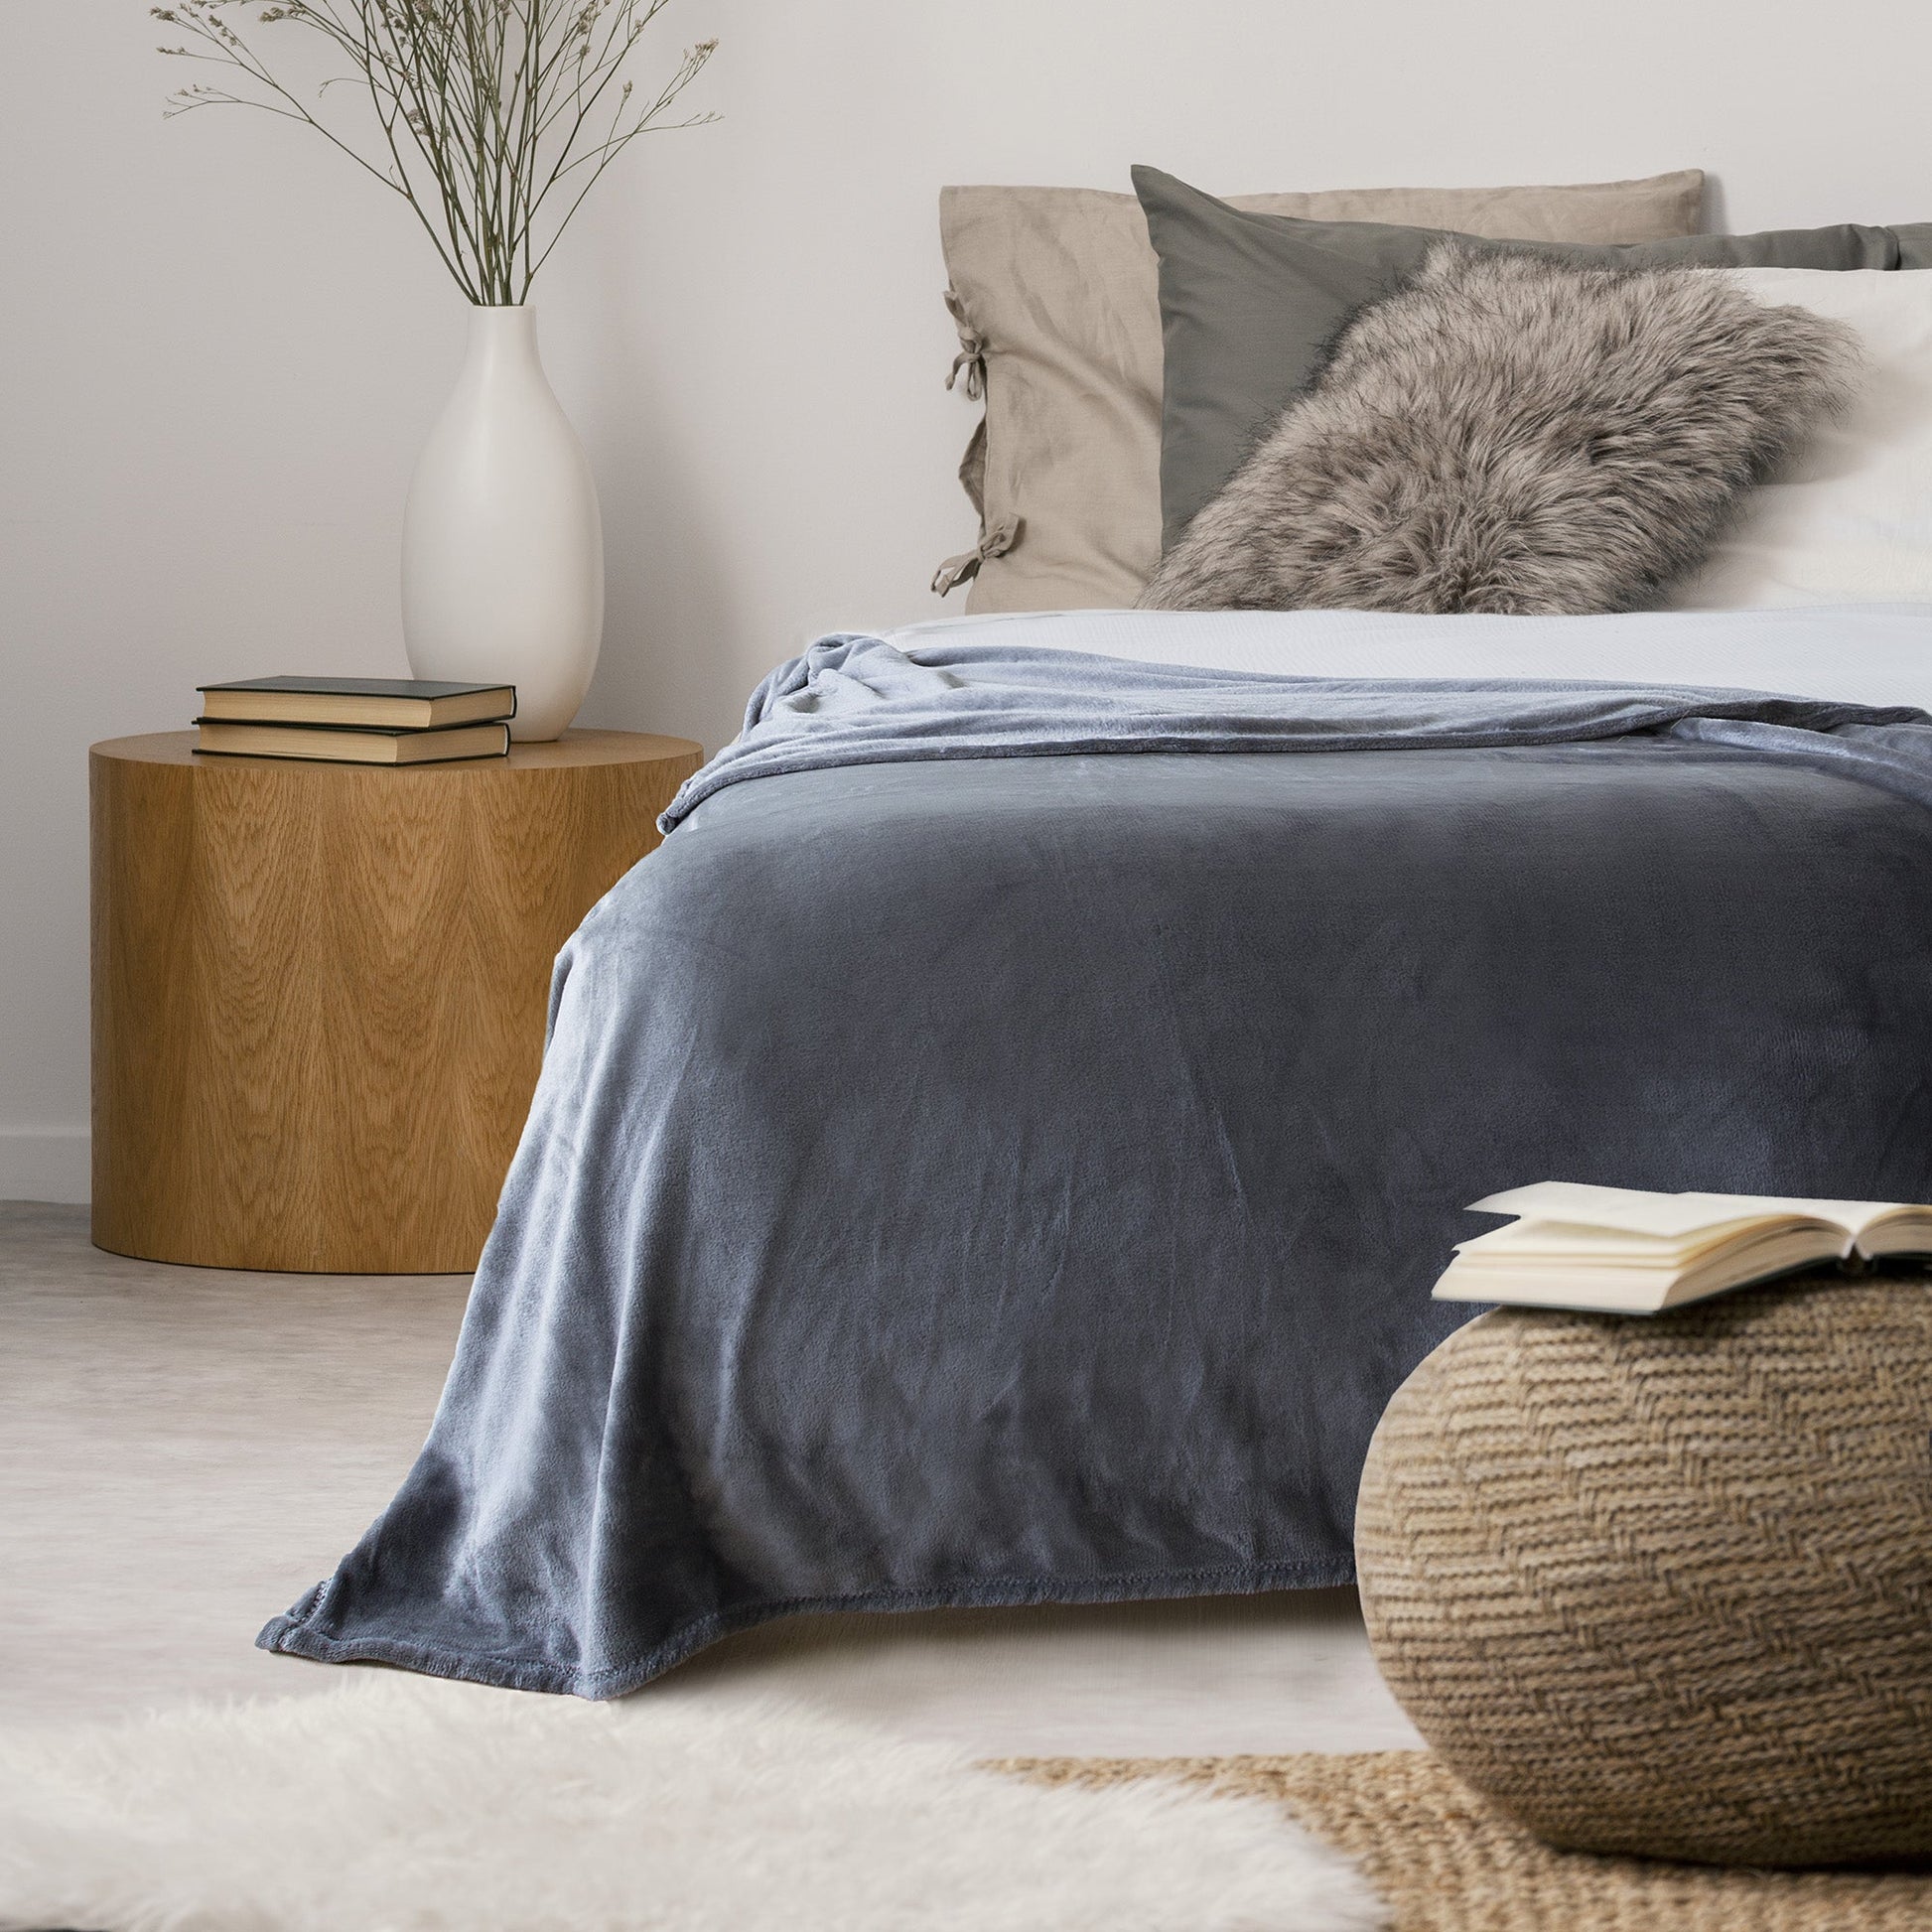 Super Soft Flannel Blanket Throw Home Decor Bedding 60X80 Charcoal - DecoElegance - Blanket Throw Home Bedding